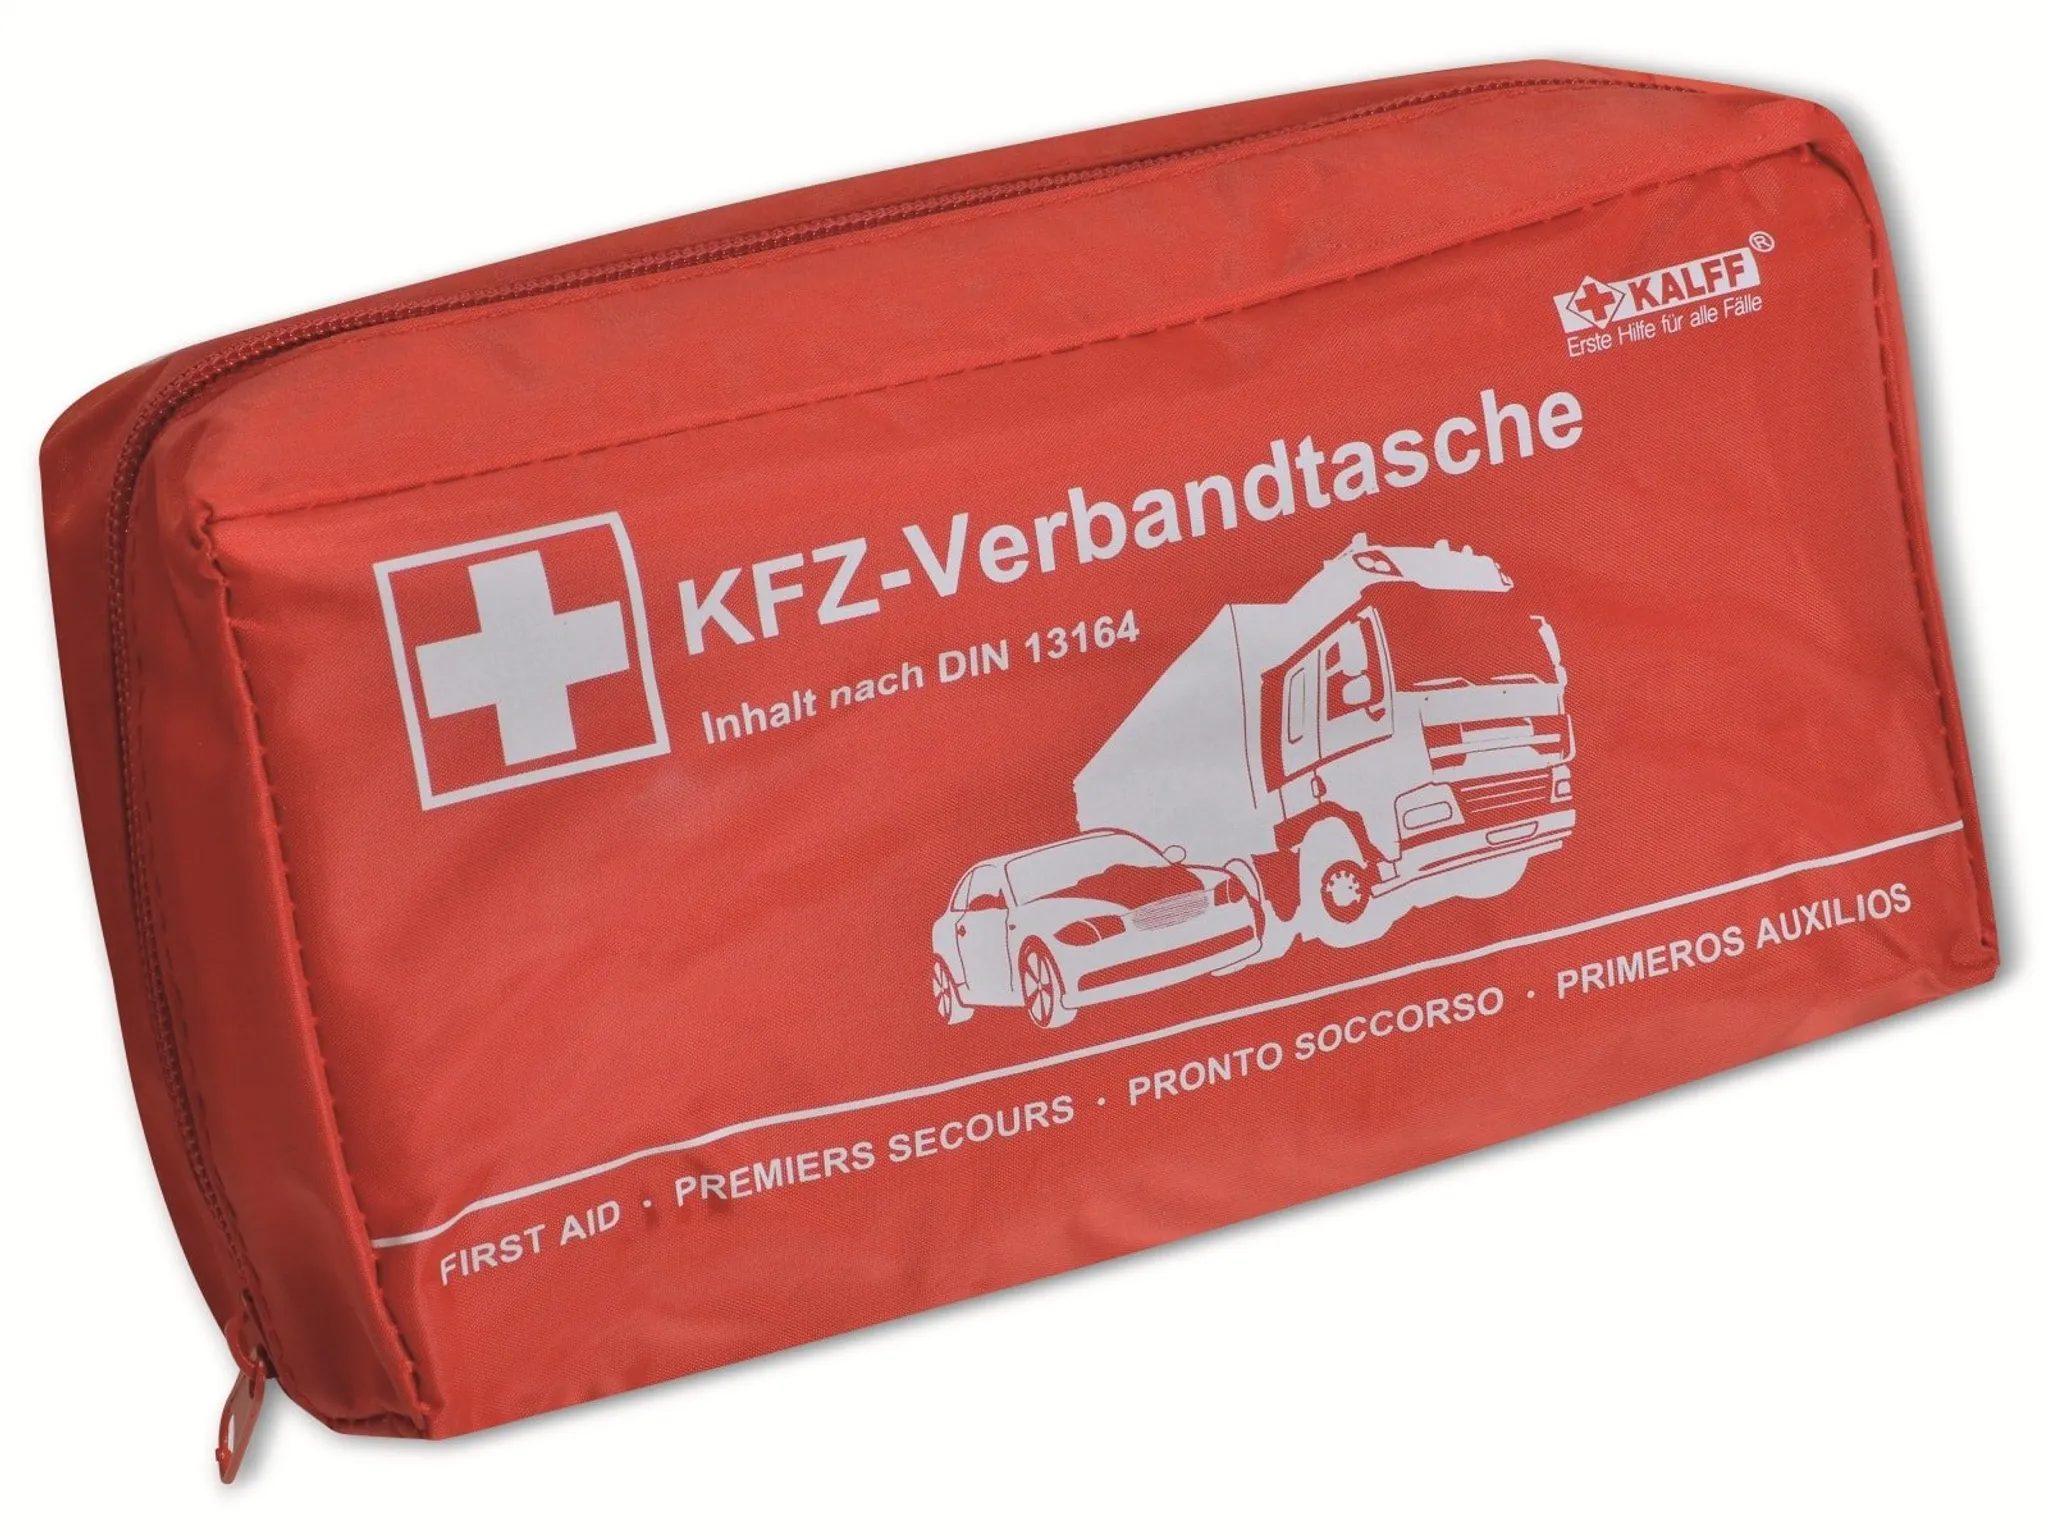 Kalff KFZ-Verbandtasche Kompakt ab 9,66 €